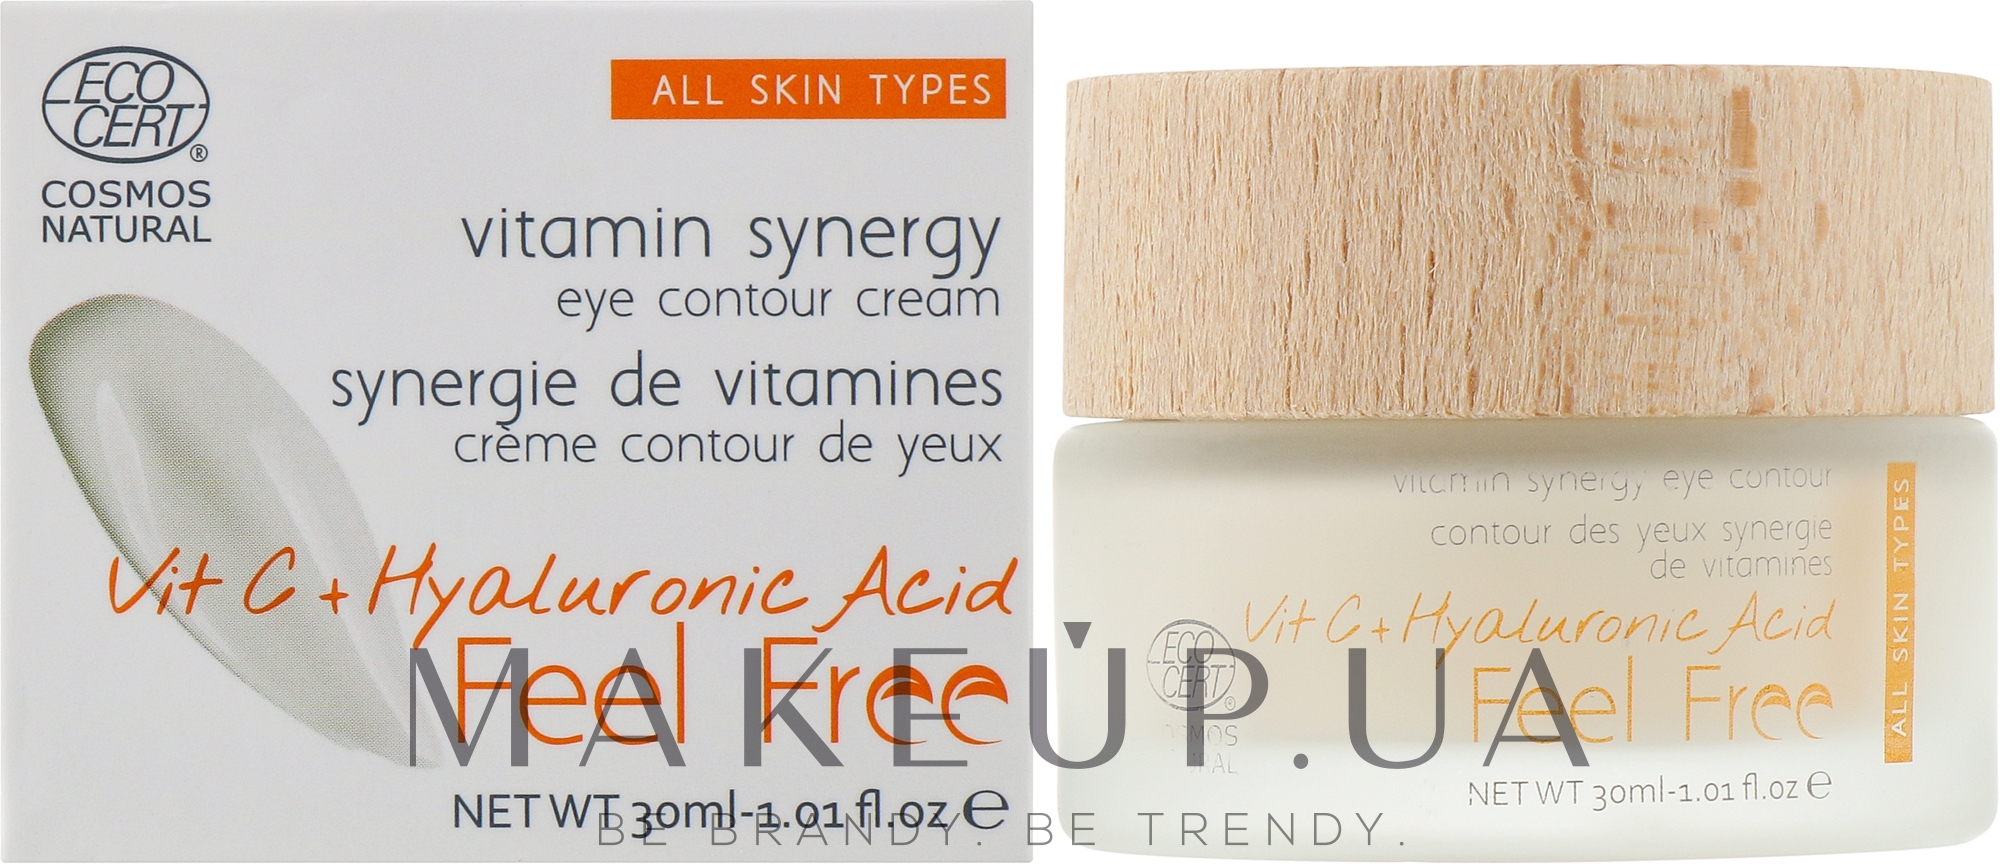 Крем для кожи вокруг глаз с витамином С - Feel Free Vit C + Hyaluronic Acid Vitamin Synergy Eye Contour Cream — фото 30ml